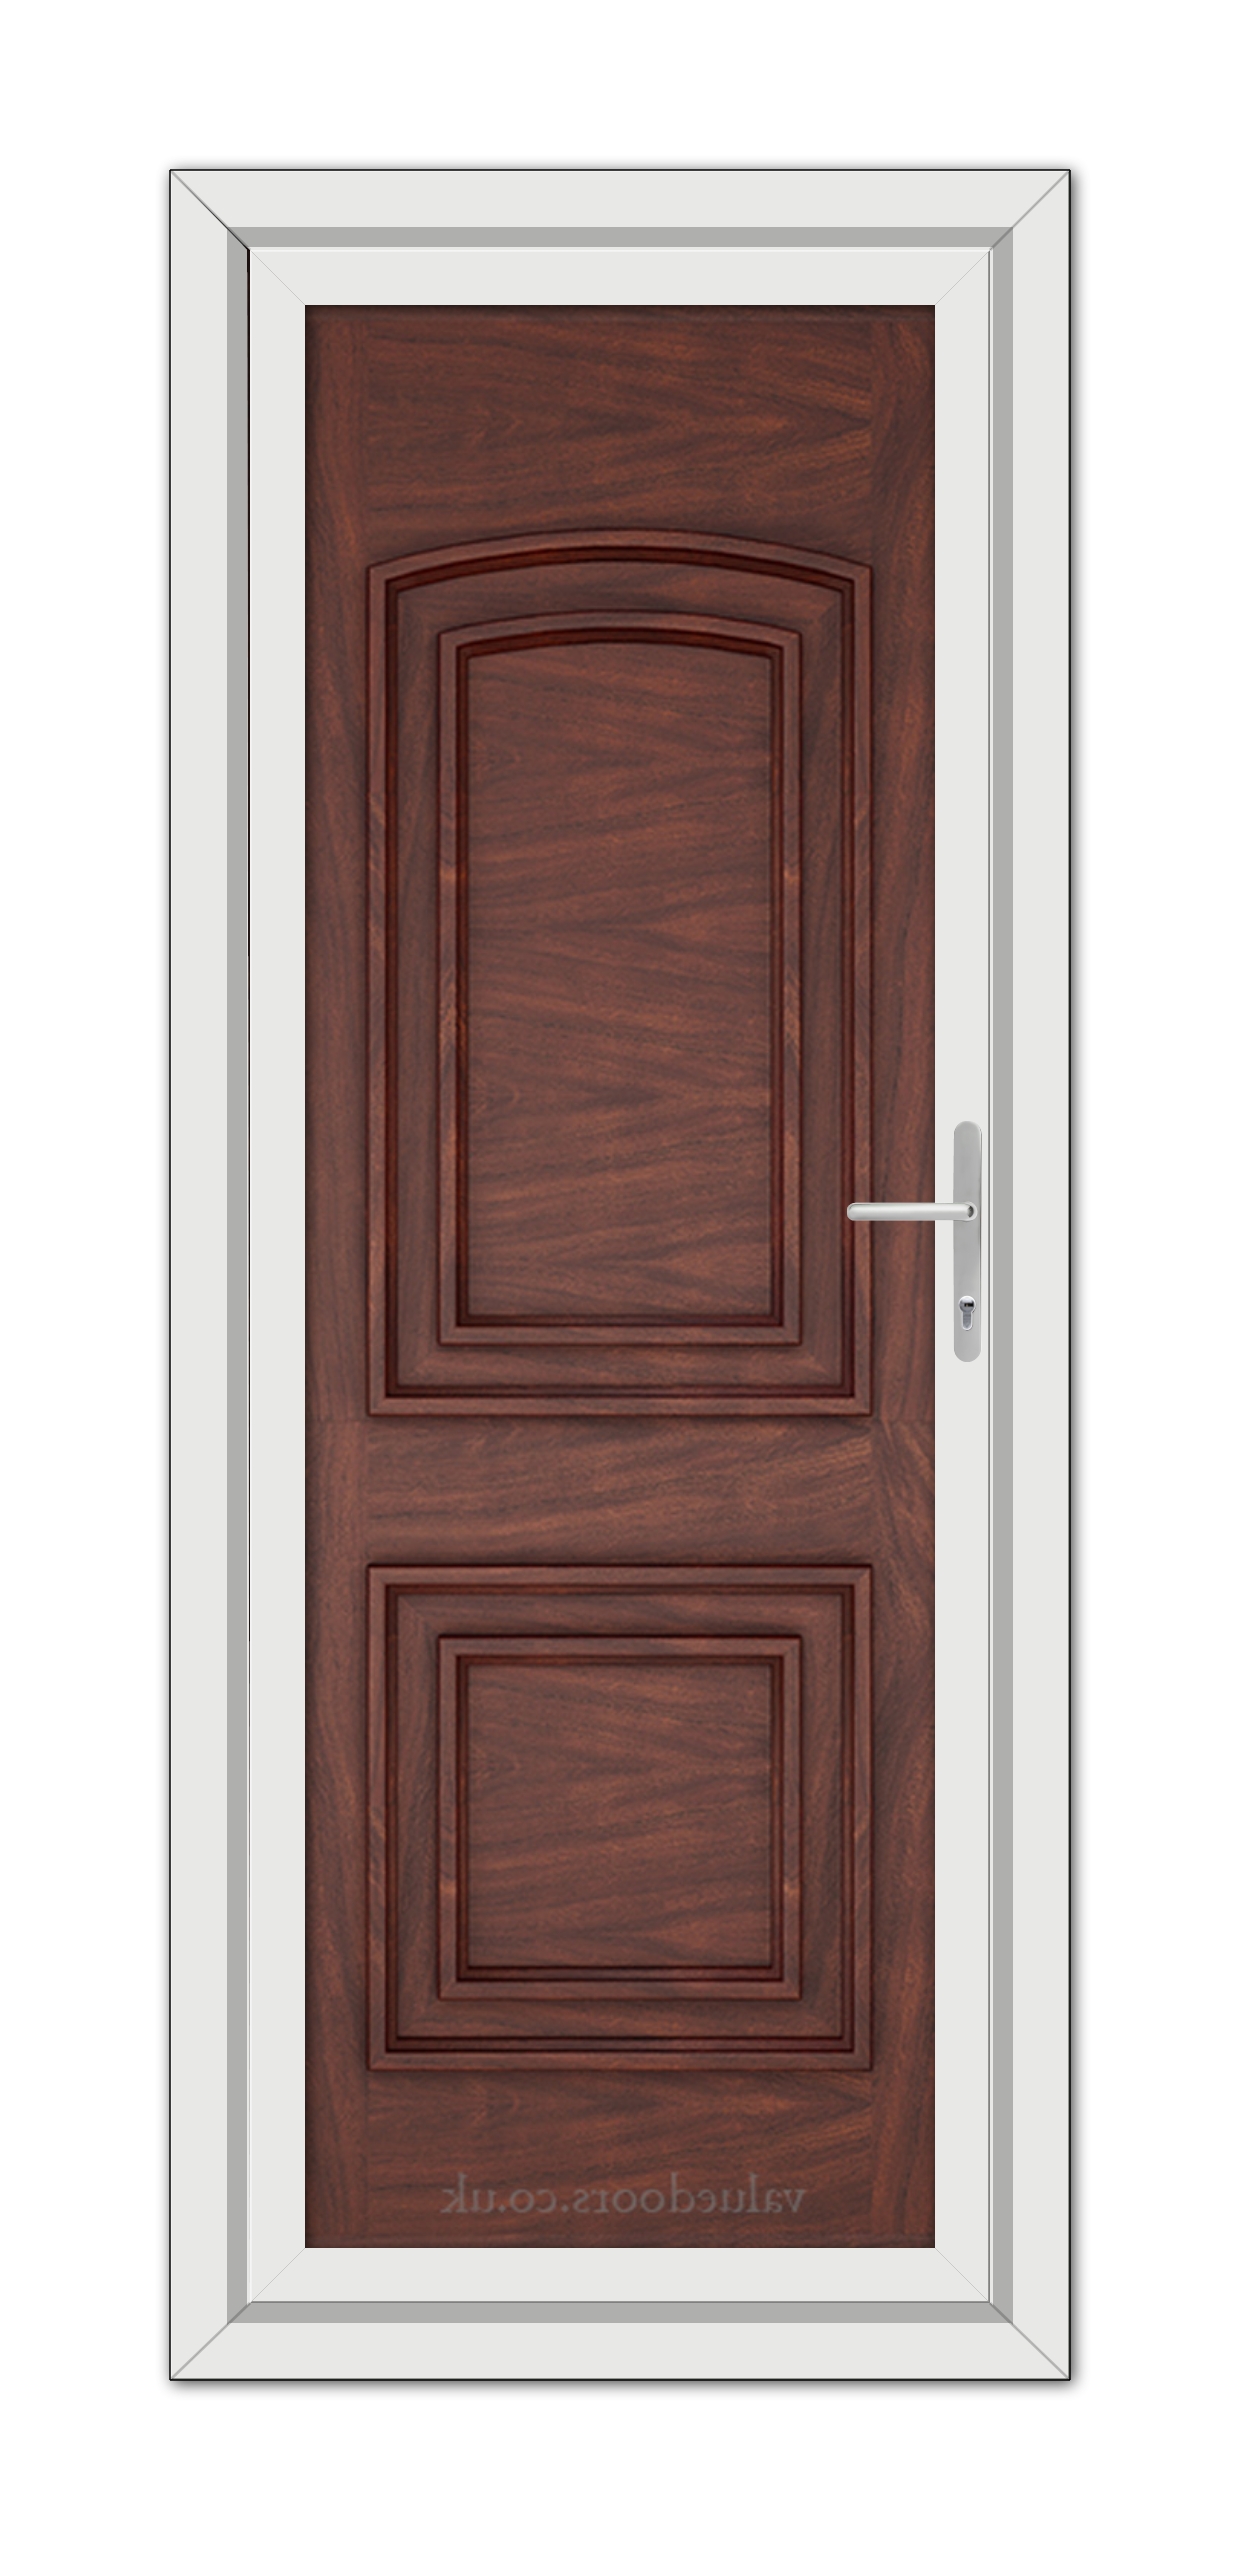 A close-up of a Rosewood Balmoral Solid uPVC Door.